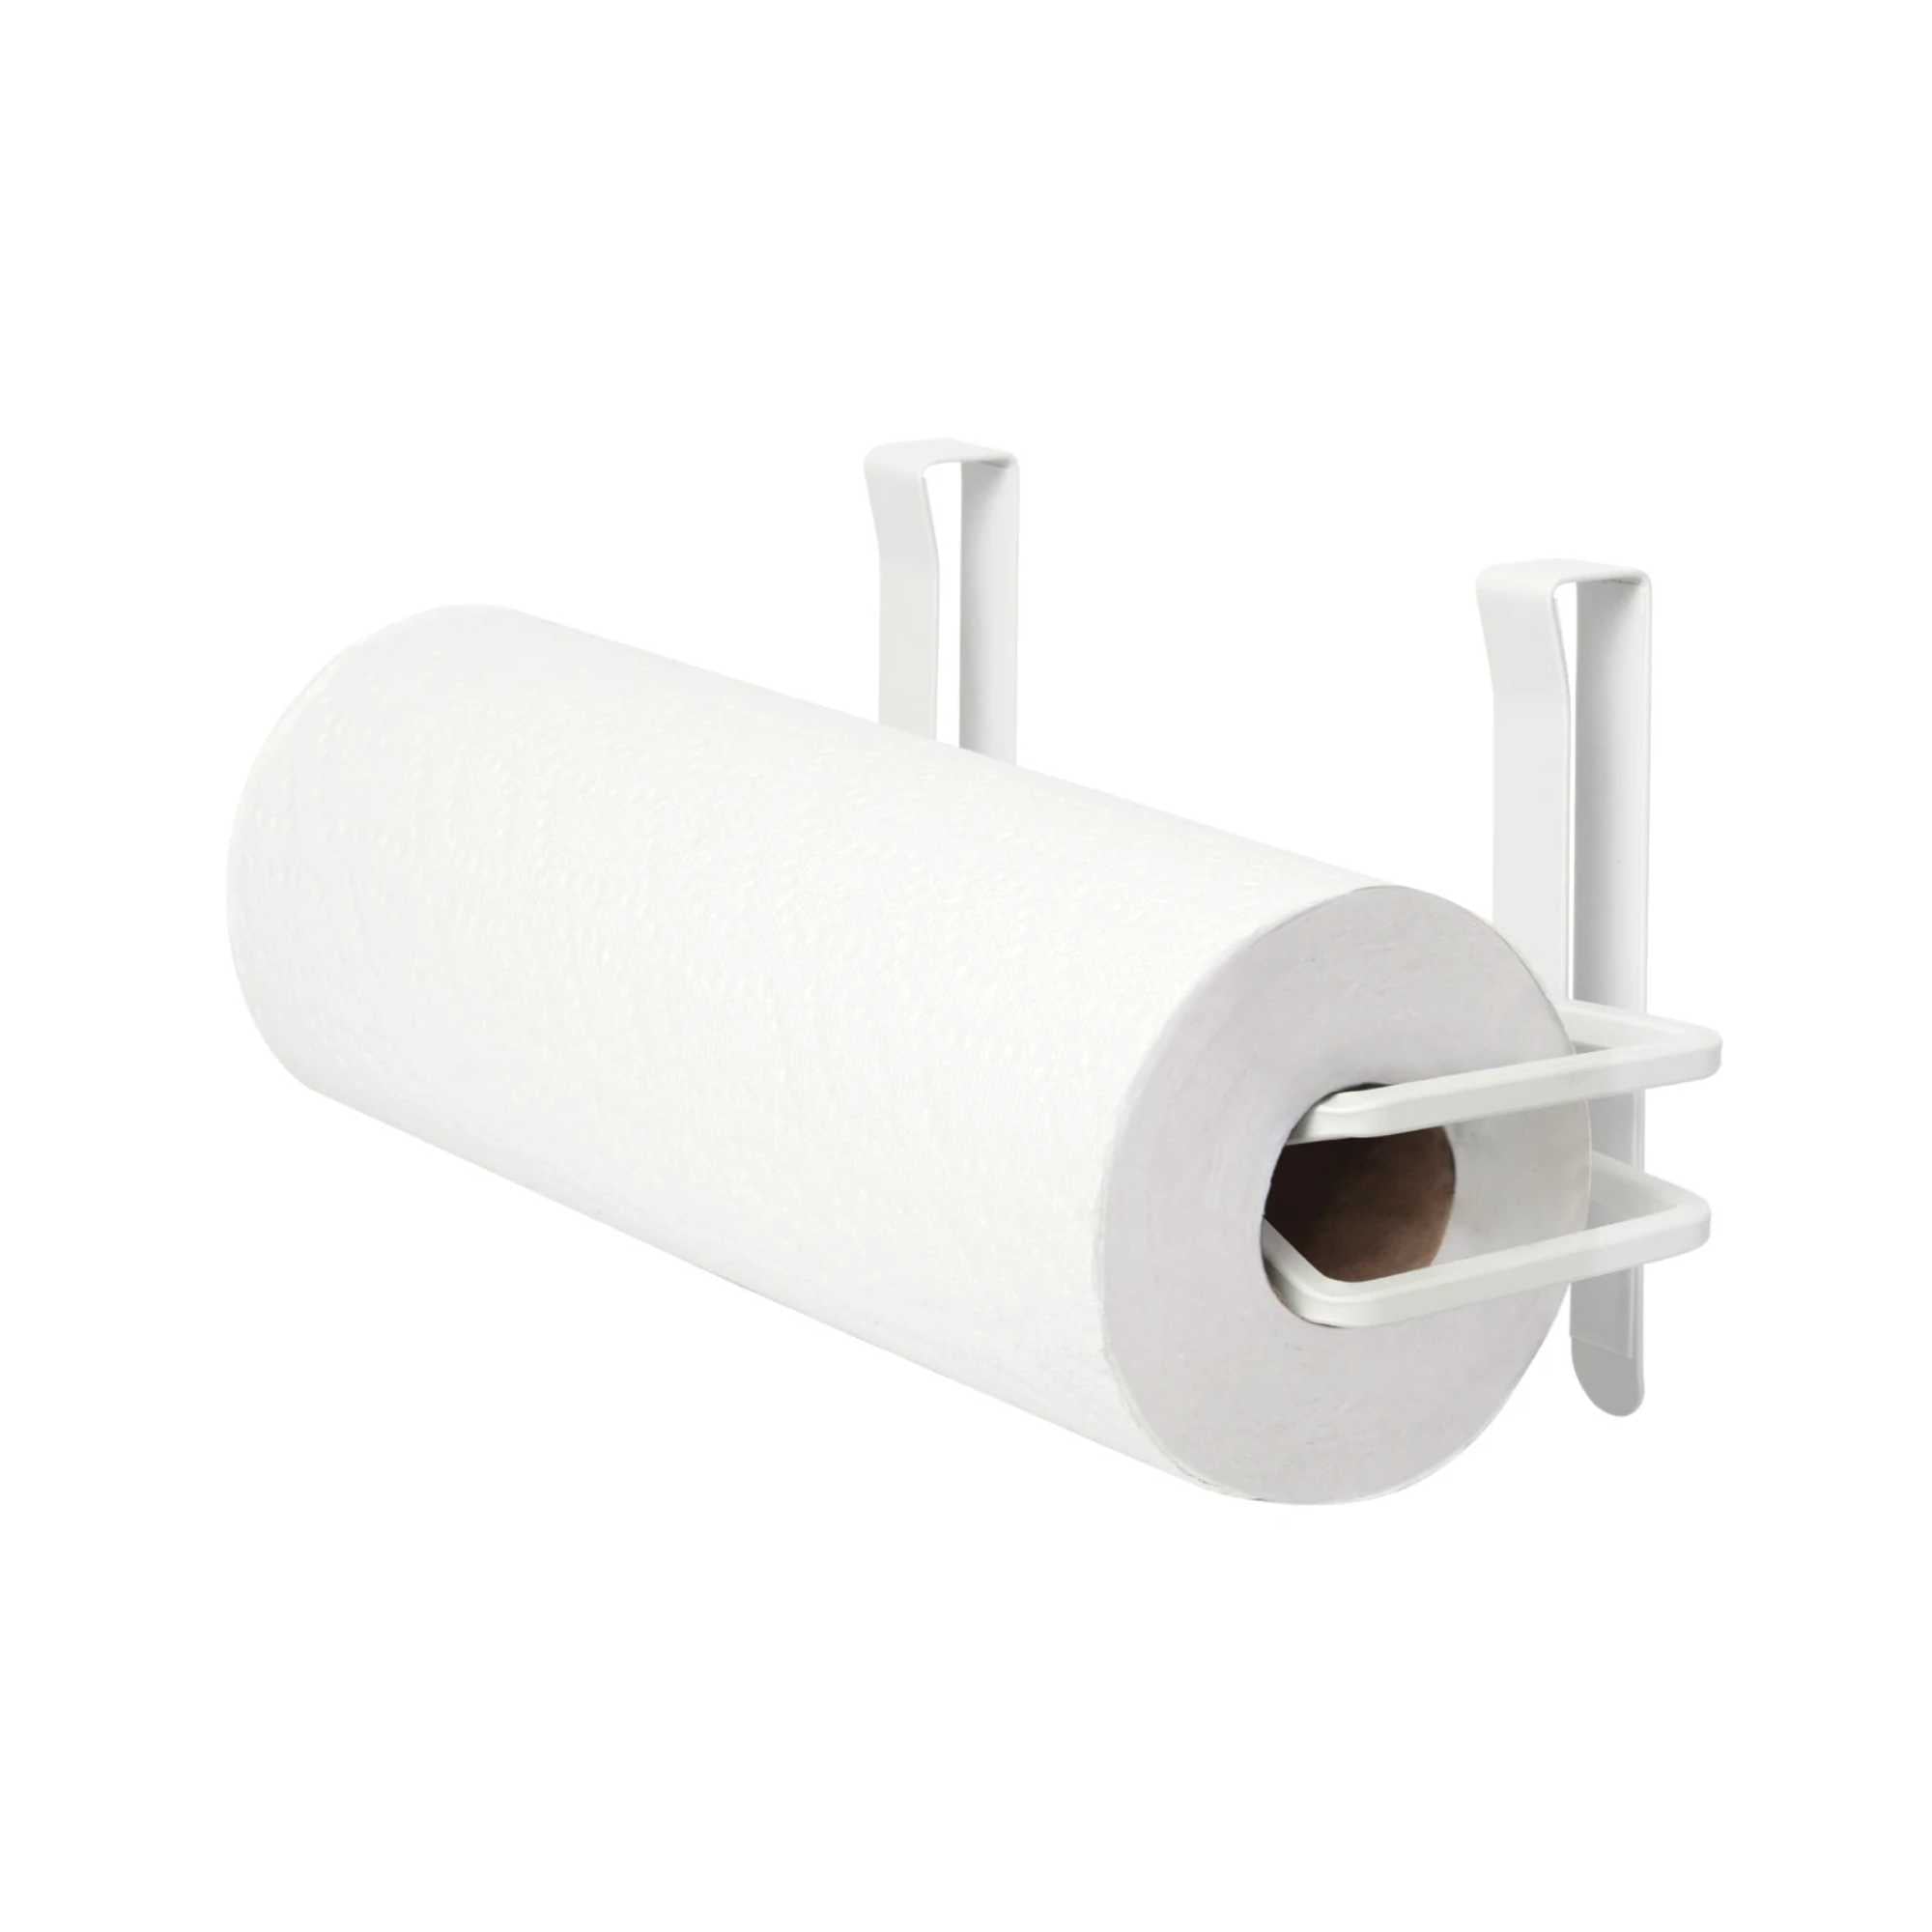 Umbra Squire Multi-Use Paper Towel Holder, white